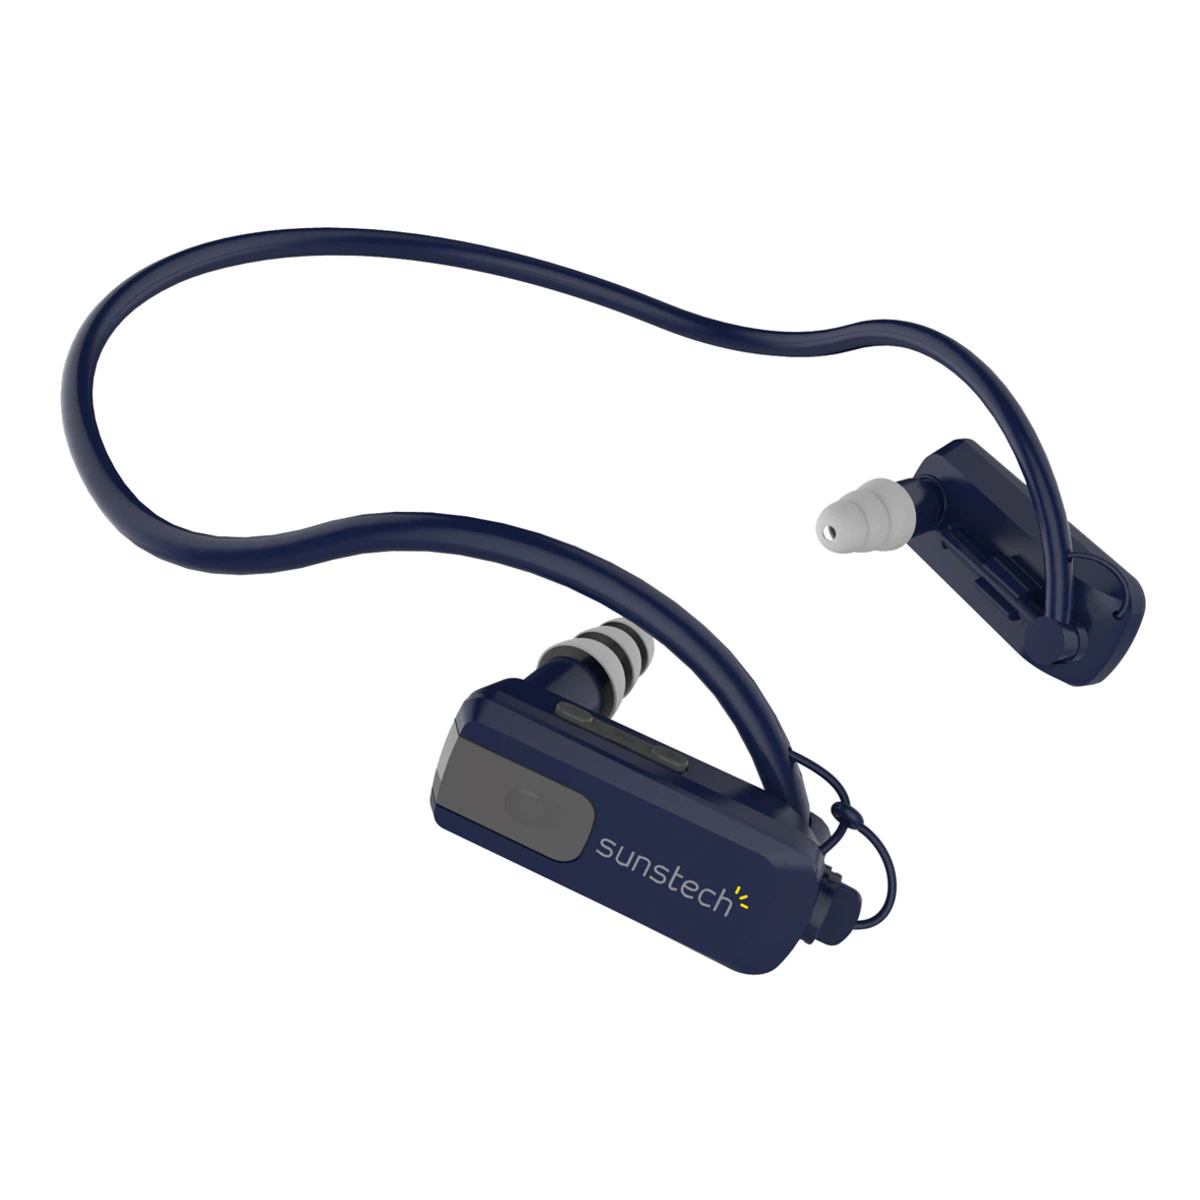 Reproductor MP3 acuático Sunstech Triton de 8GB